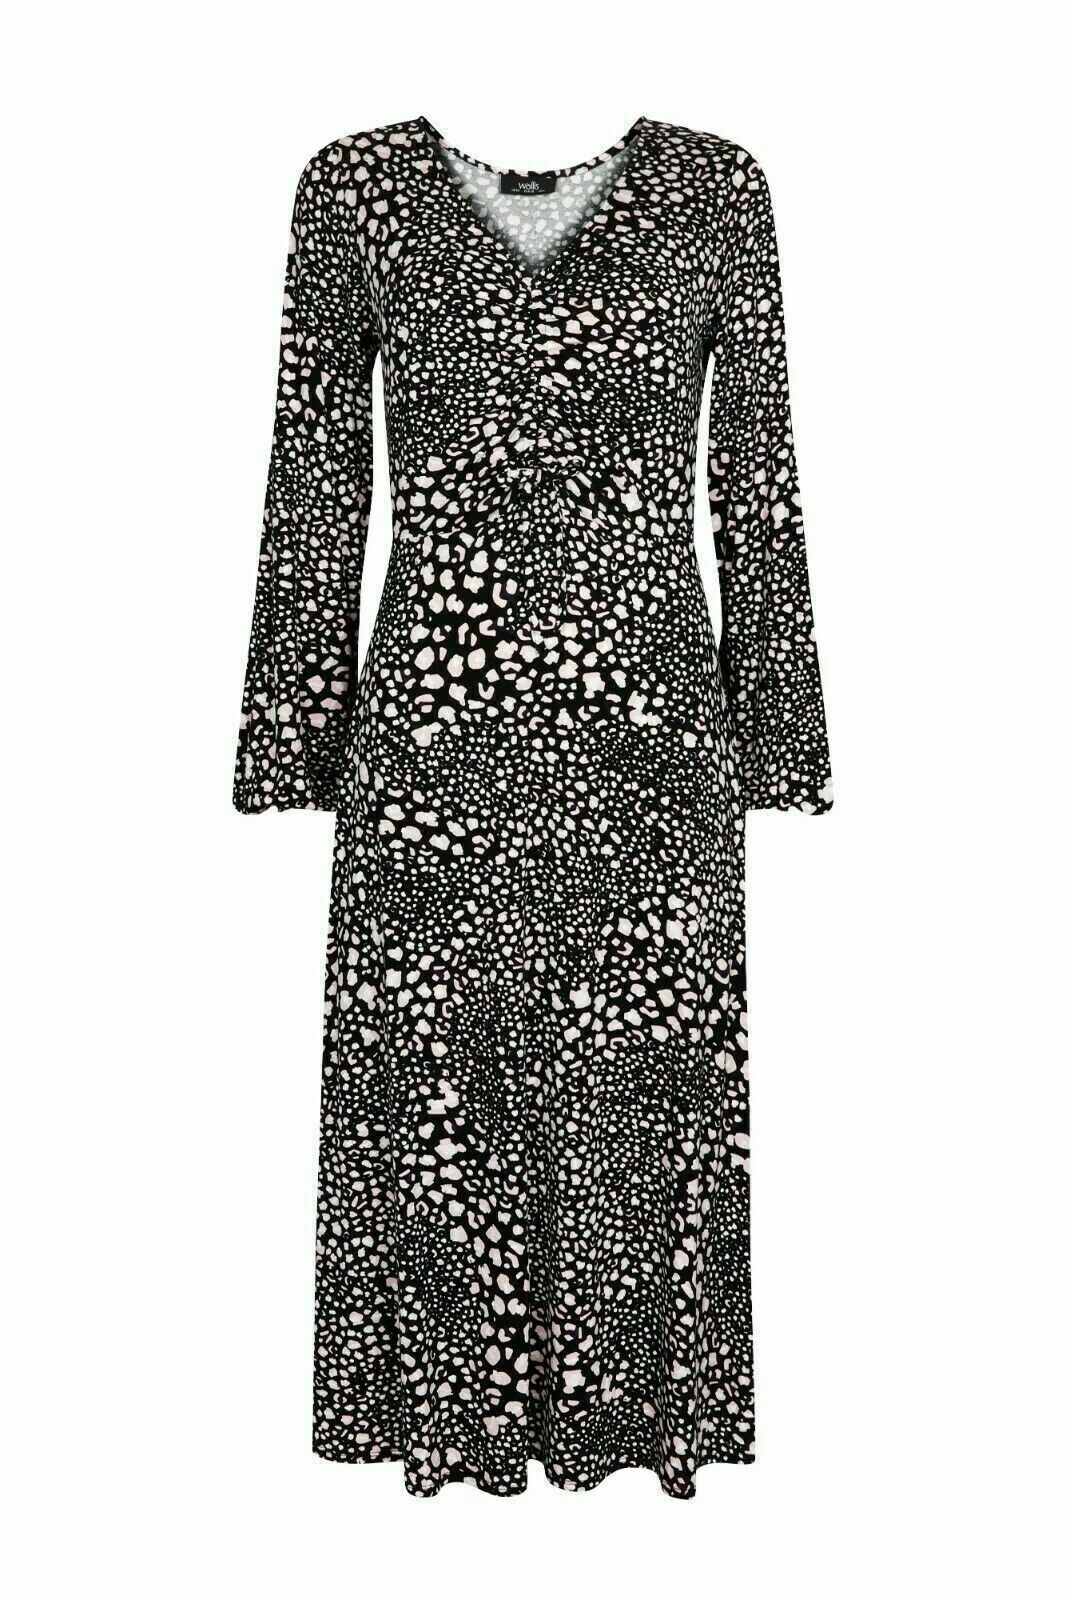 New Ex Wallis UK size 8 Black Pink White Animal Print Jersey Midi Dress  - Picture 2 of 12